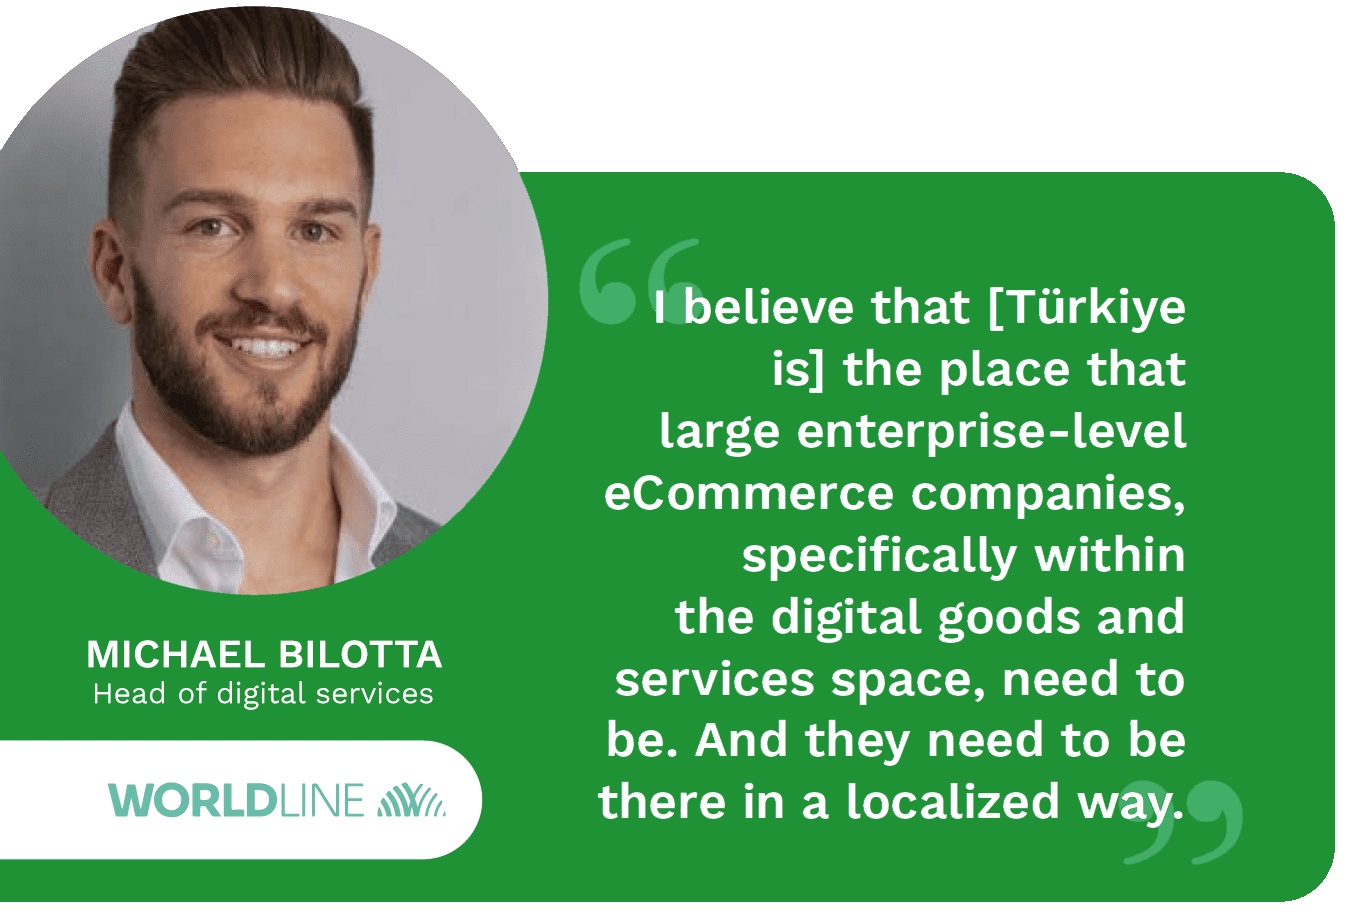 Worldline’s Michael Bilotta, head of digital services, on what makes the Turkish eCommerce market a unique investment prospect.